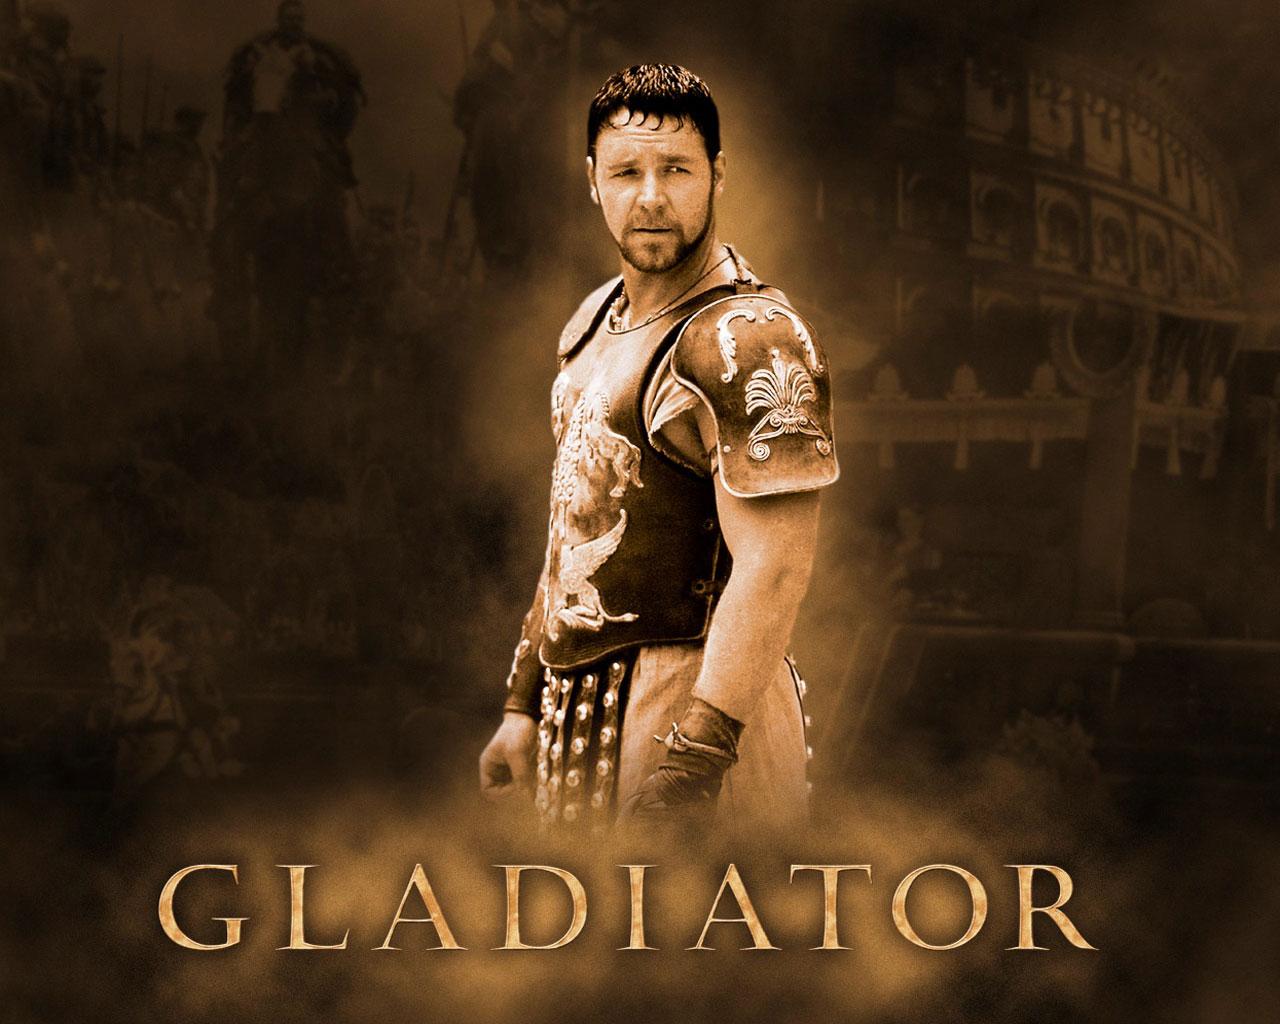 Gladiator Wallpaper #2 1280 x 1024 